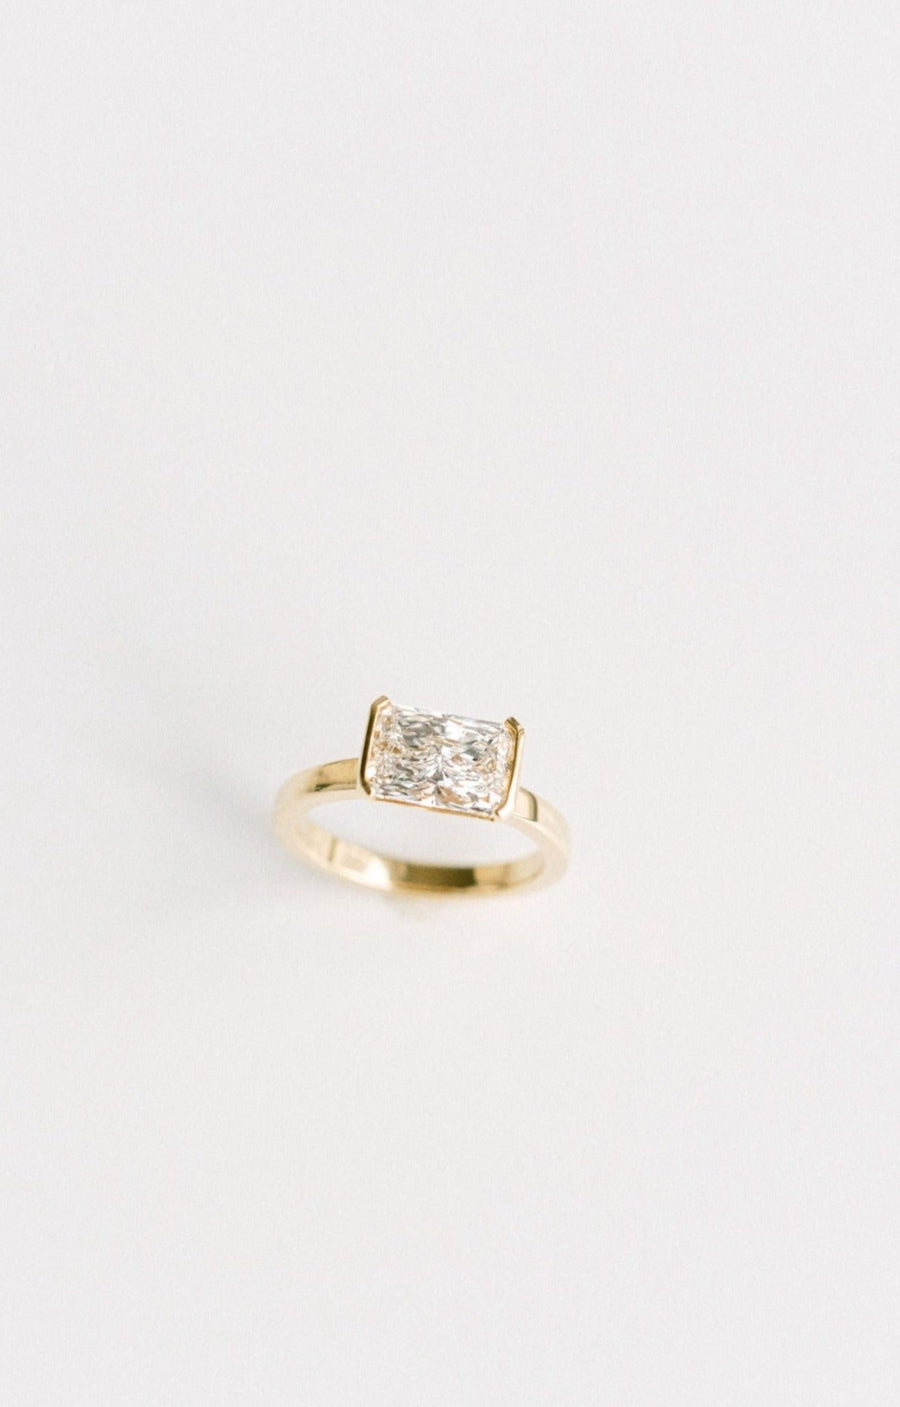 Radiant Cut East-West Half Bezel Diamond Engagement Ring, 14k Yellow Gold